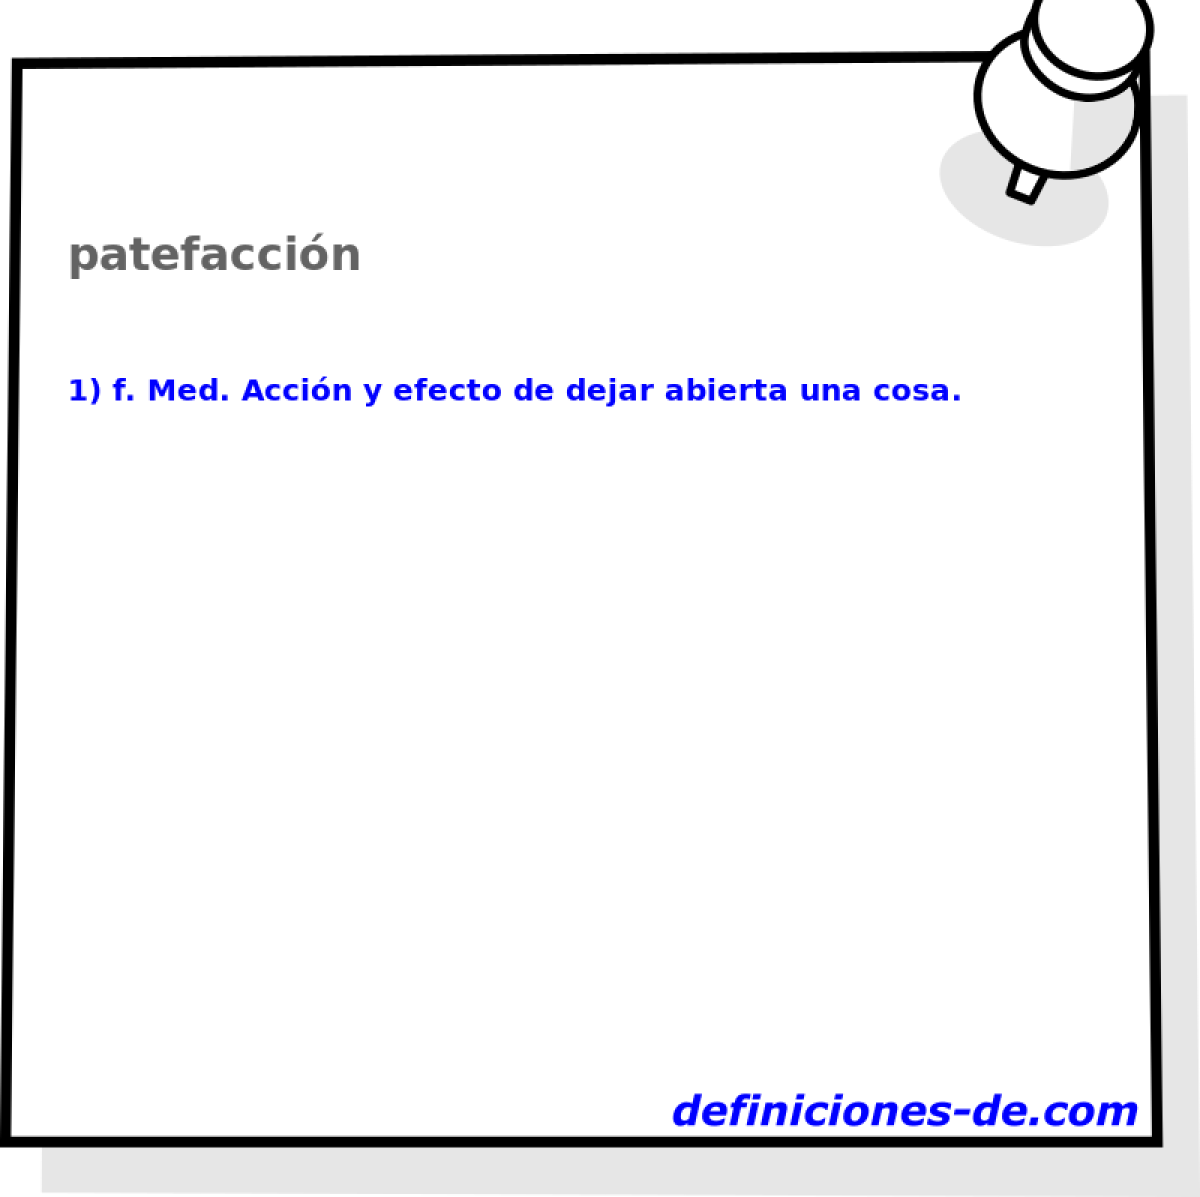 patefaccin 